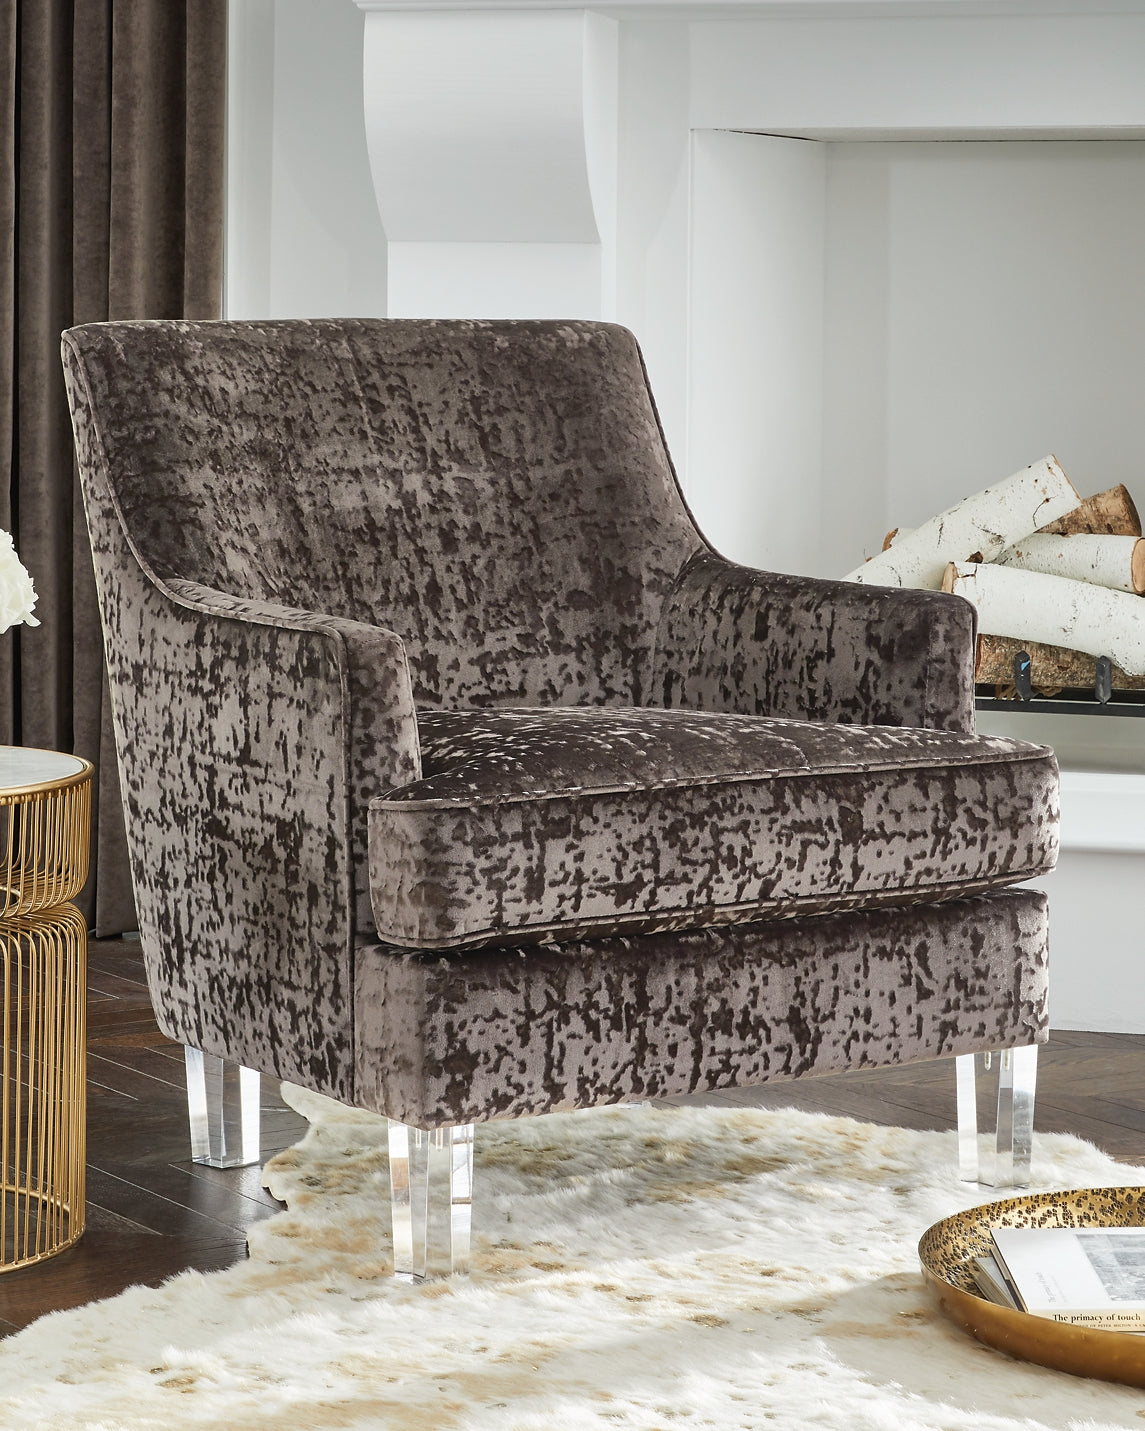 Gloriann Accent Chair at Cloud 9 Mattress & Furniture furniture, home furnishing, home decor